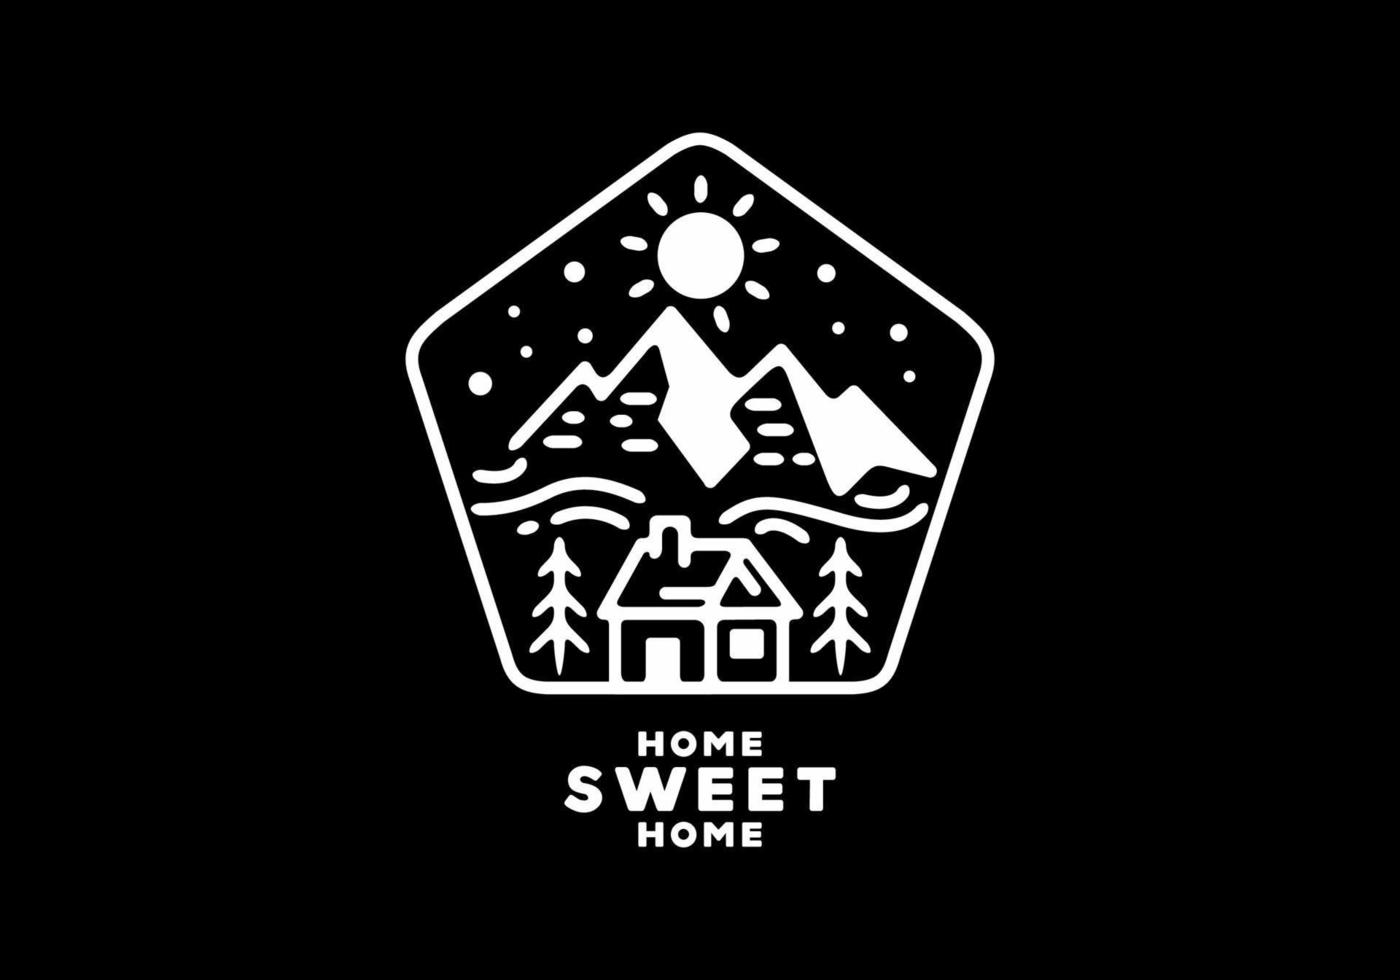 Pentagon badge Home sweet home line art illustration vector